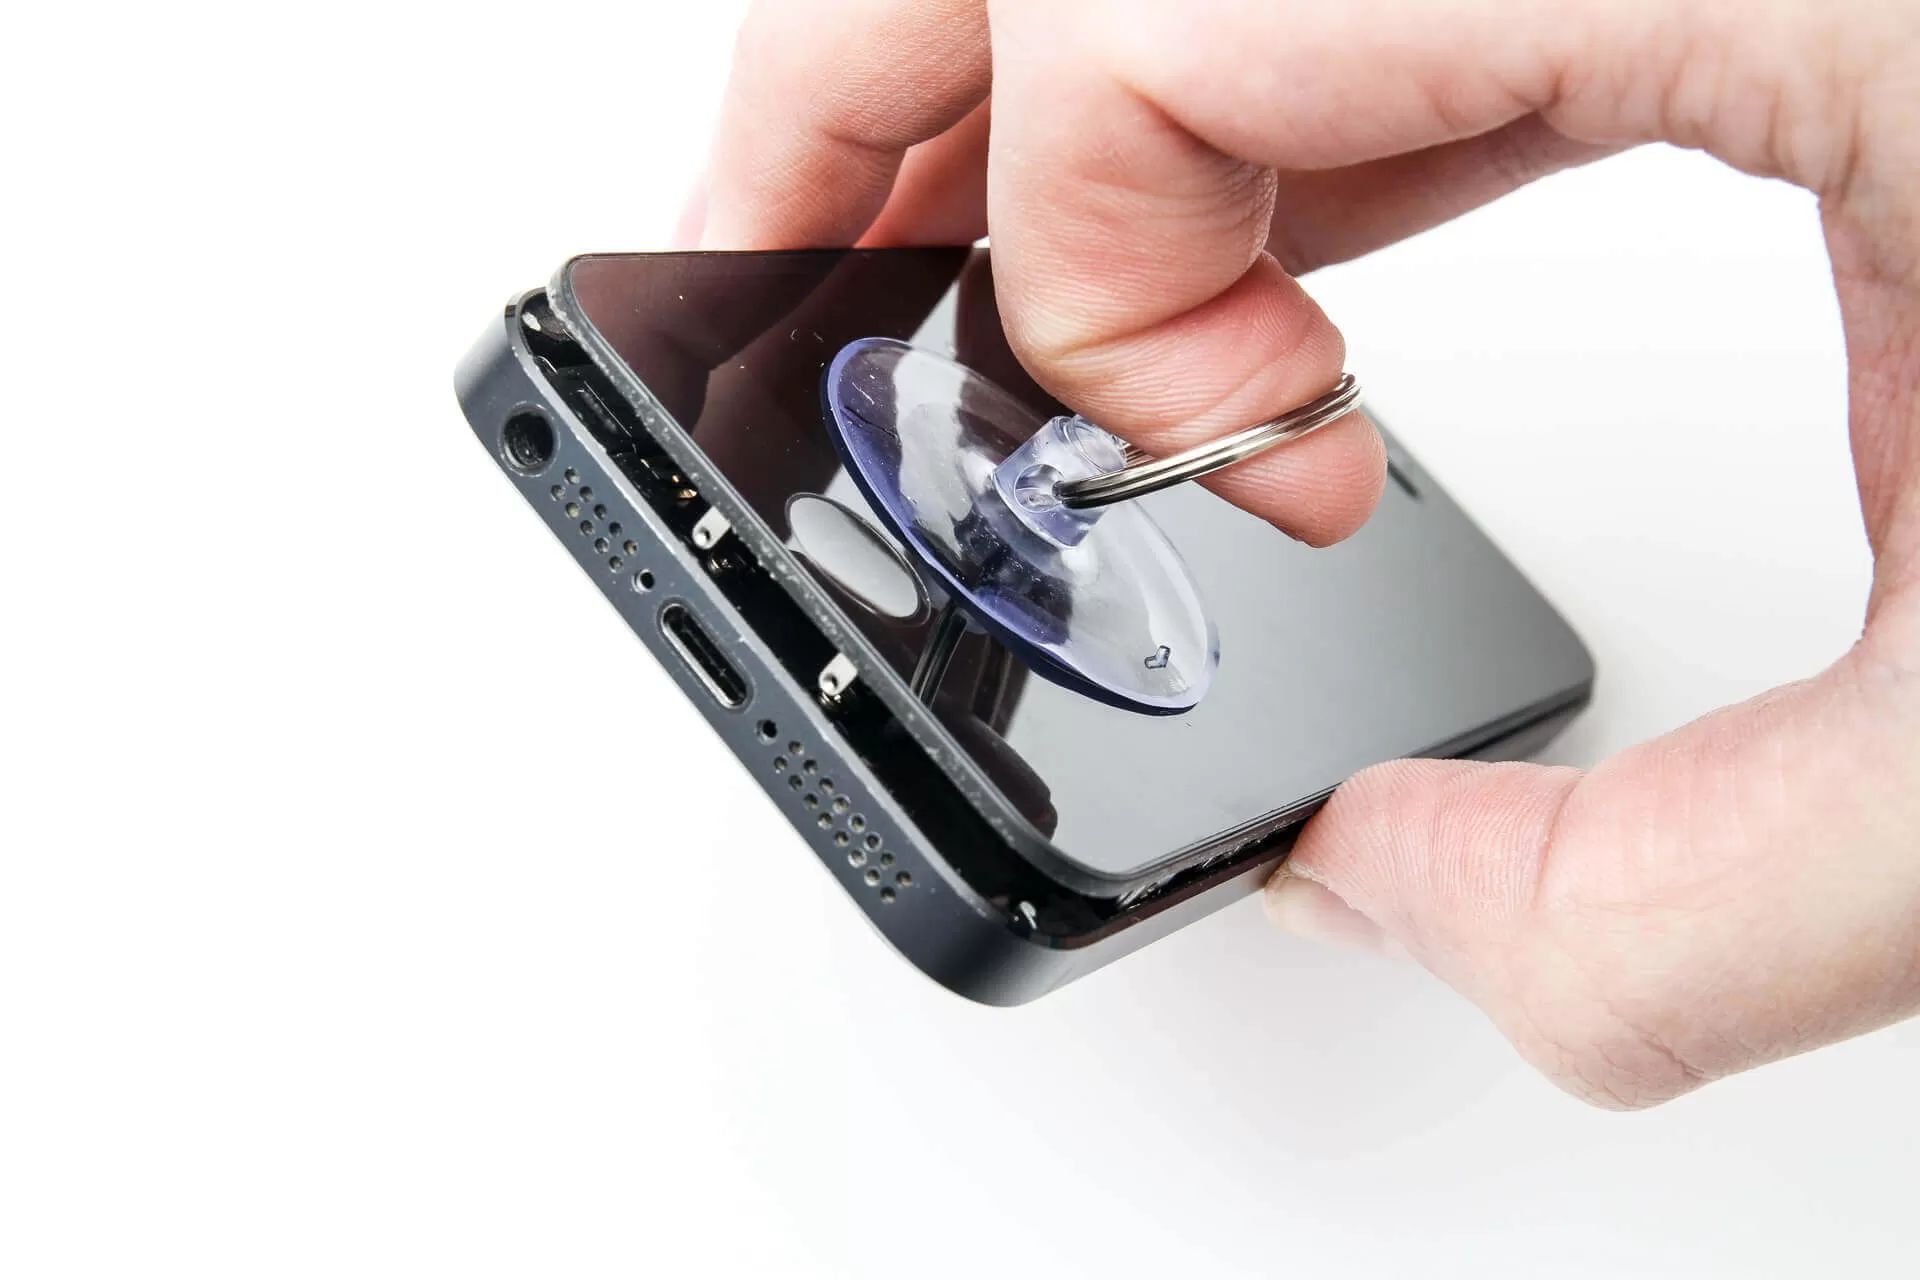 iPhone 6S Plus Lcd Ekran Dokunmatik Ön Cam+Tamir Seti